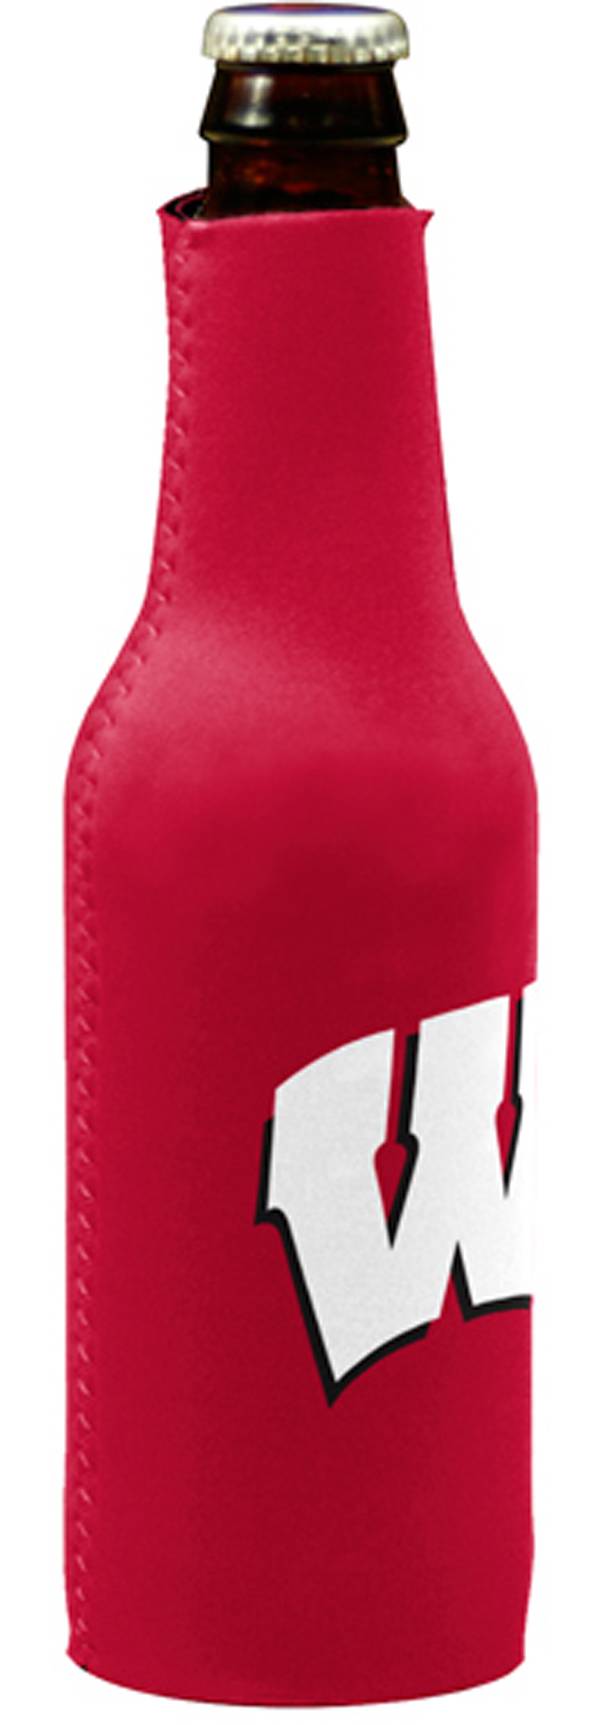 Logo Brands Wisconsin Badgers Bottle Cooler product image